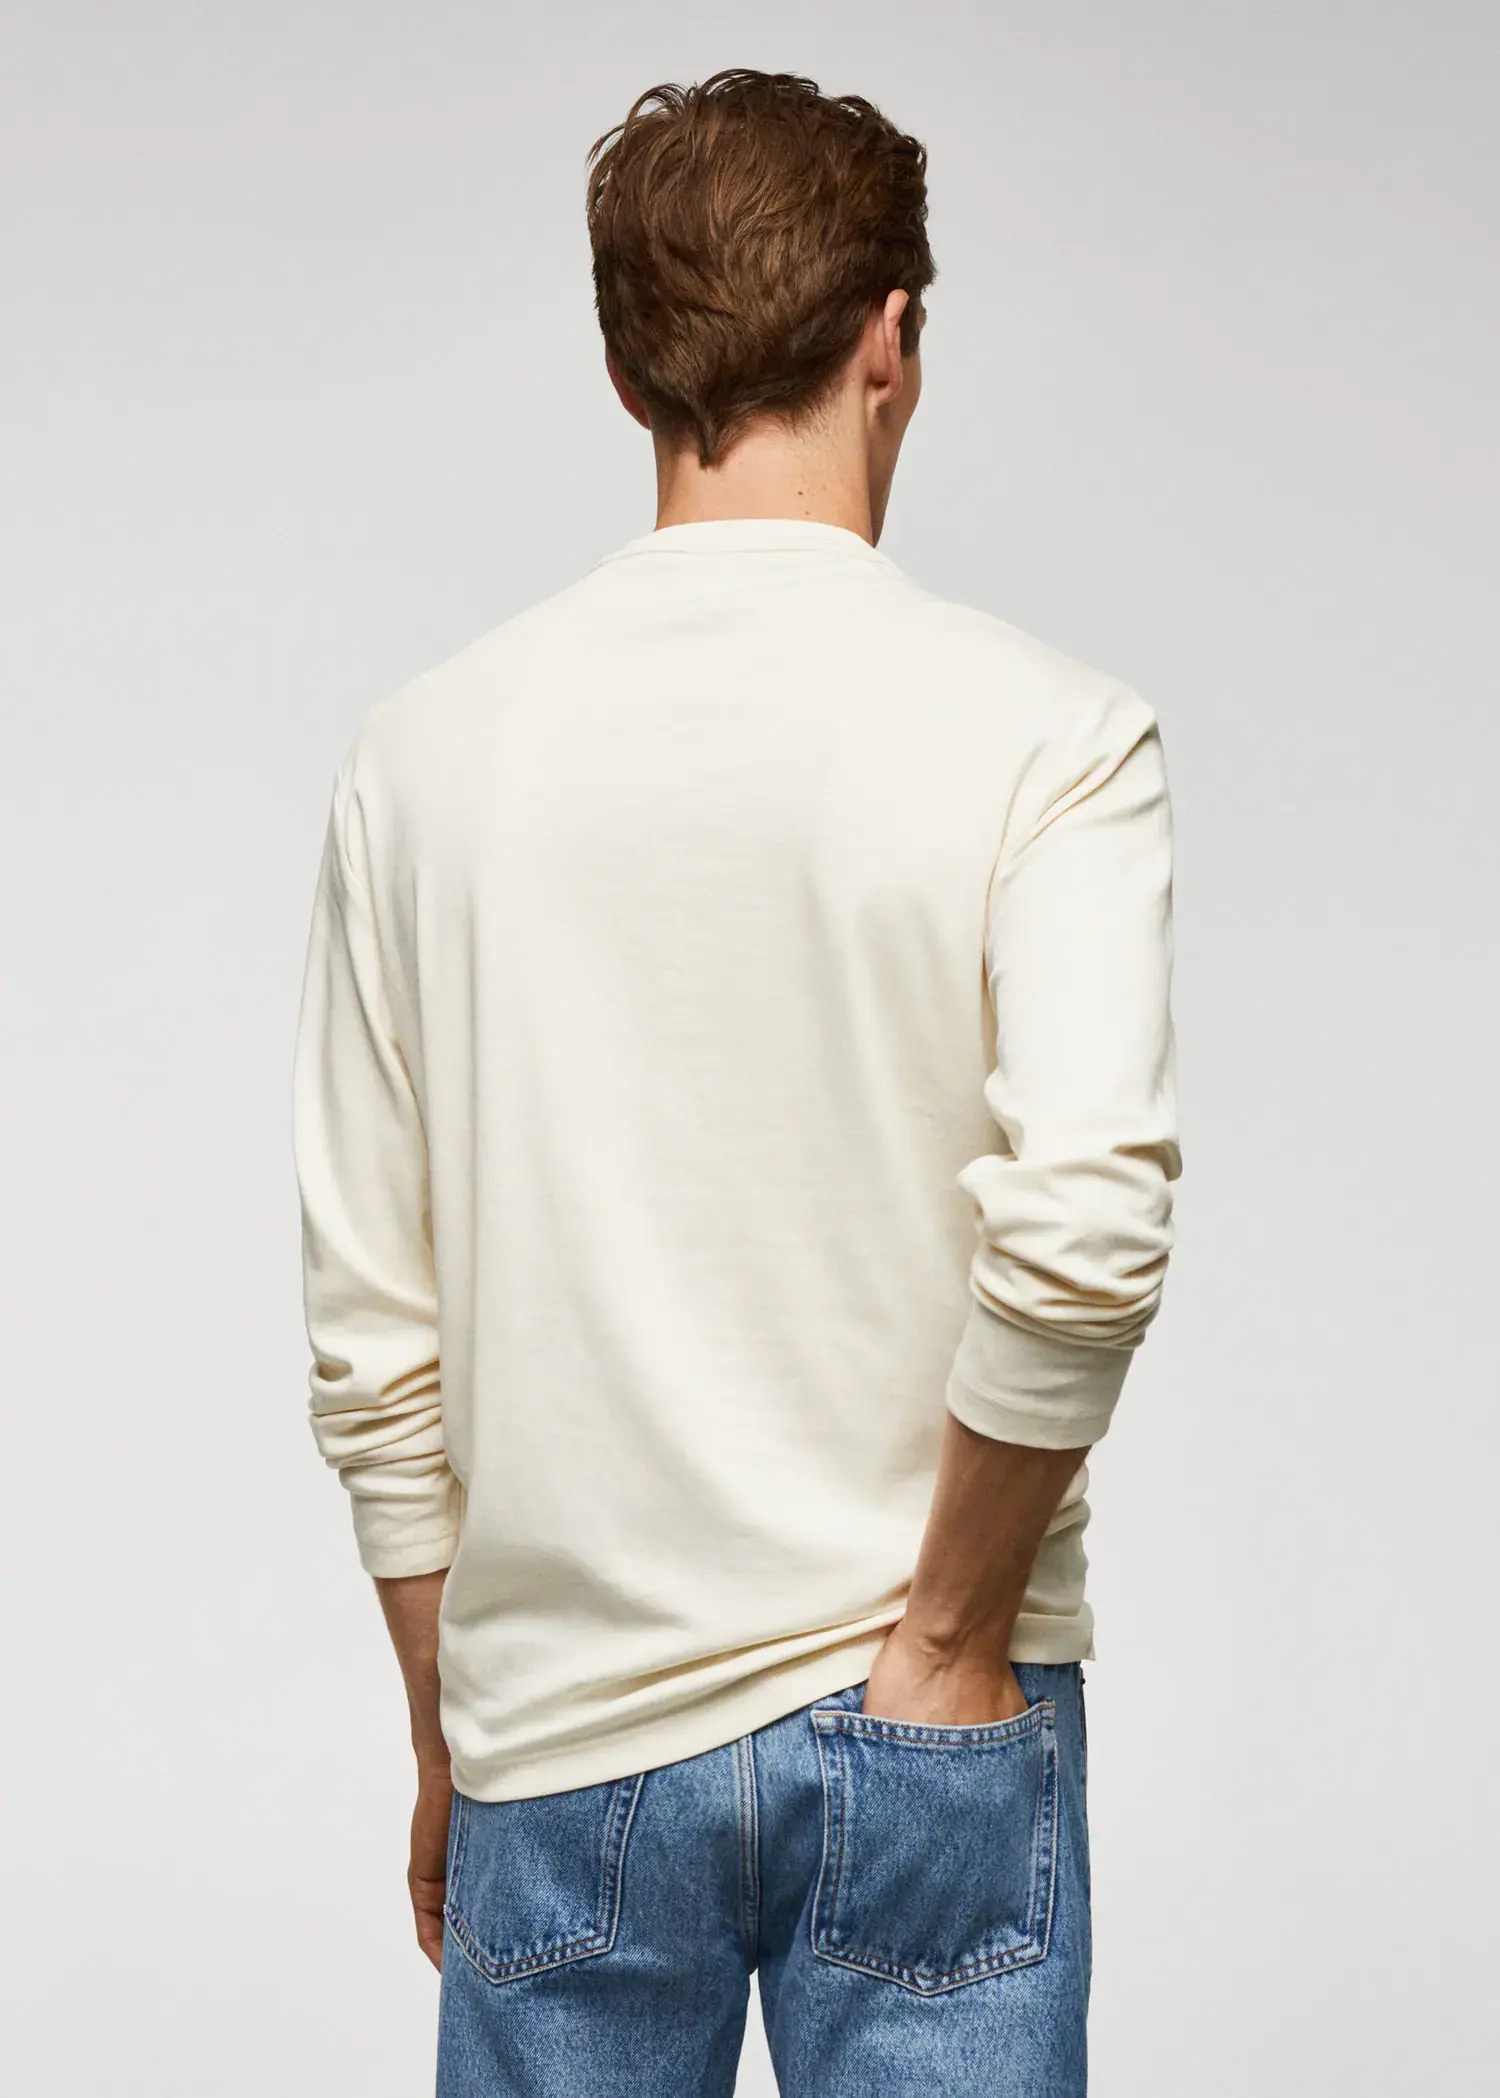 Mango 100% cotton long-sleeved t-shirt. 3